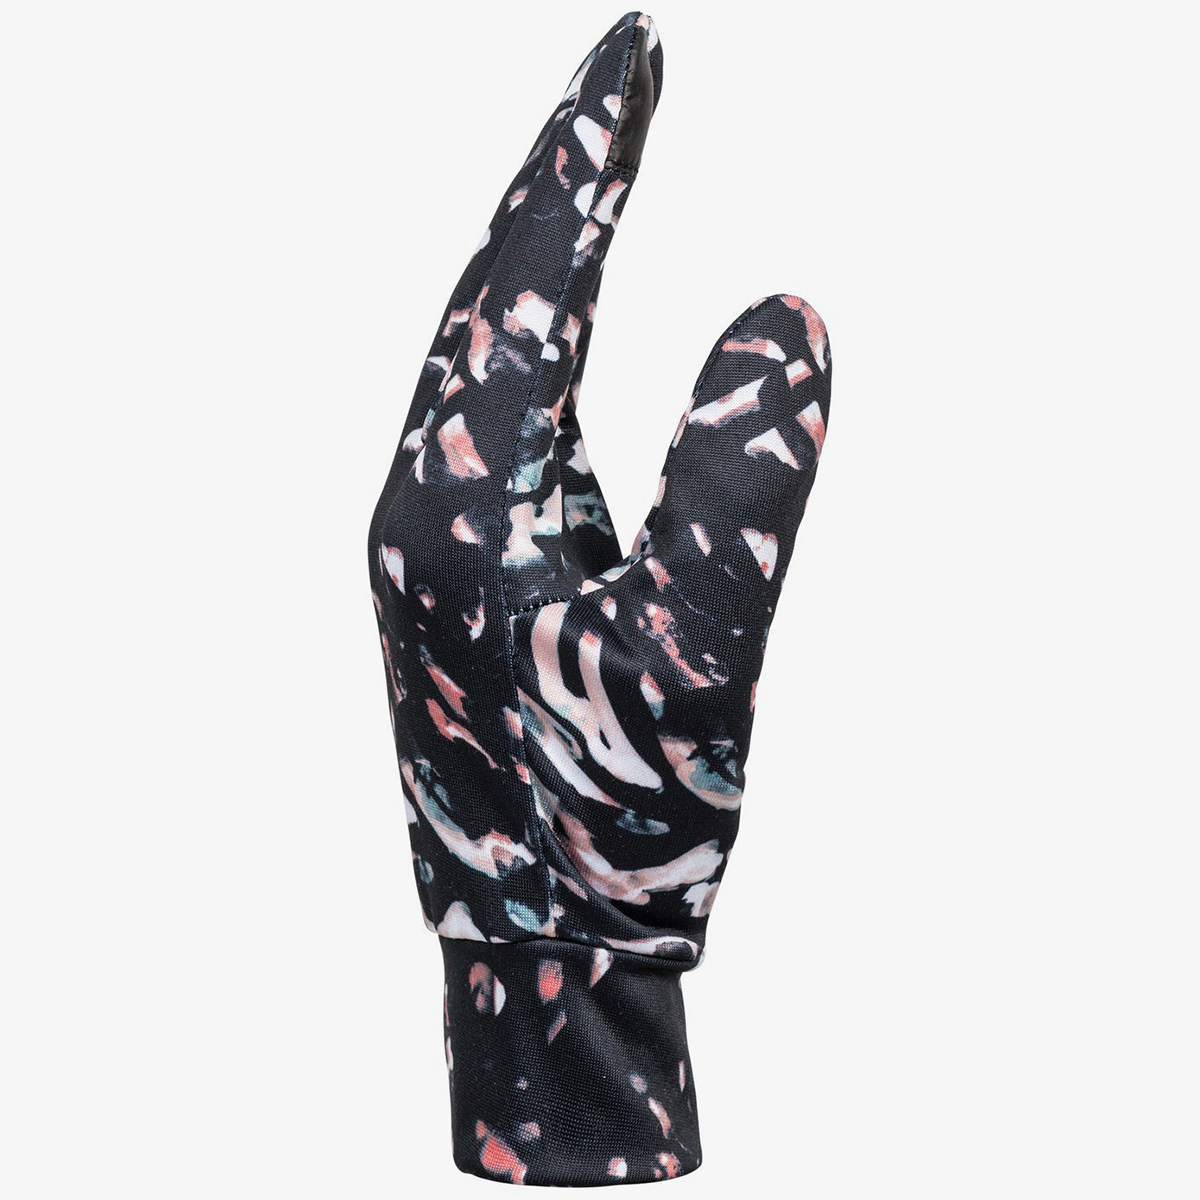 Roxy Hydrosmart перчатки. Roxy перчатки сноубордические женские. Сноубордические перчатки женские Roxy салатовые. Erjtj03318-kvj8 Roxy перчатки.